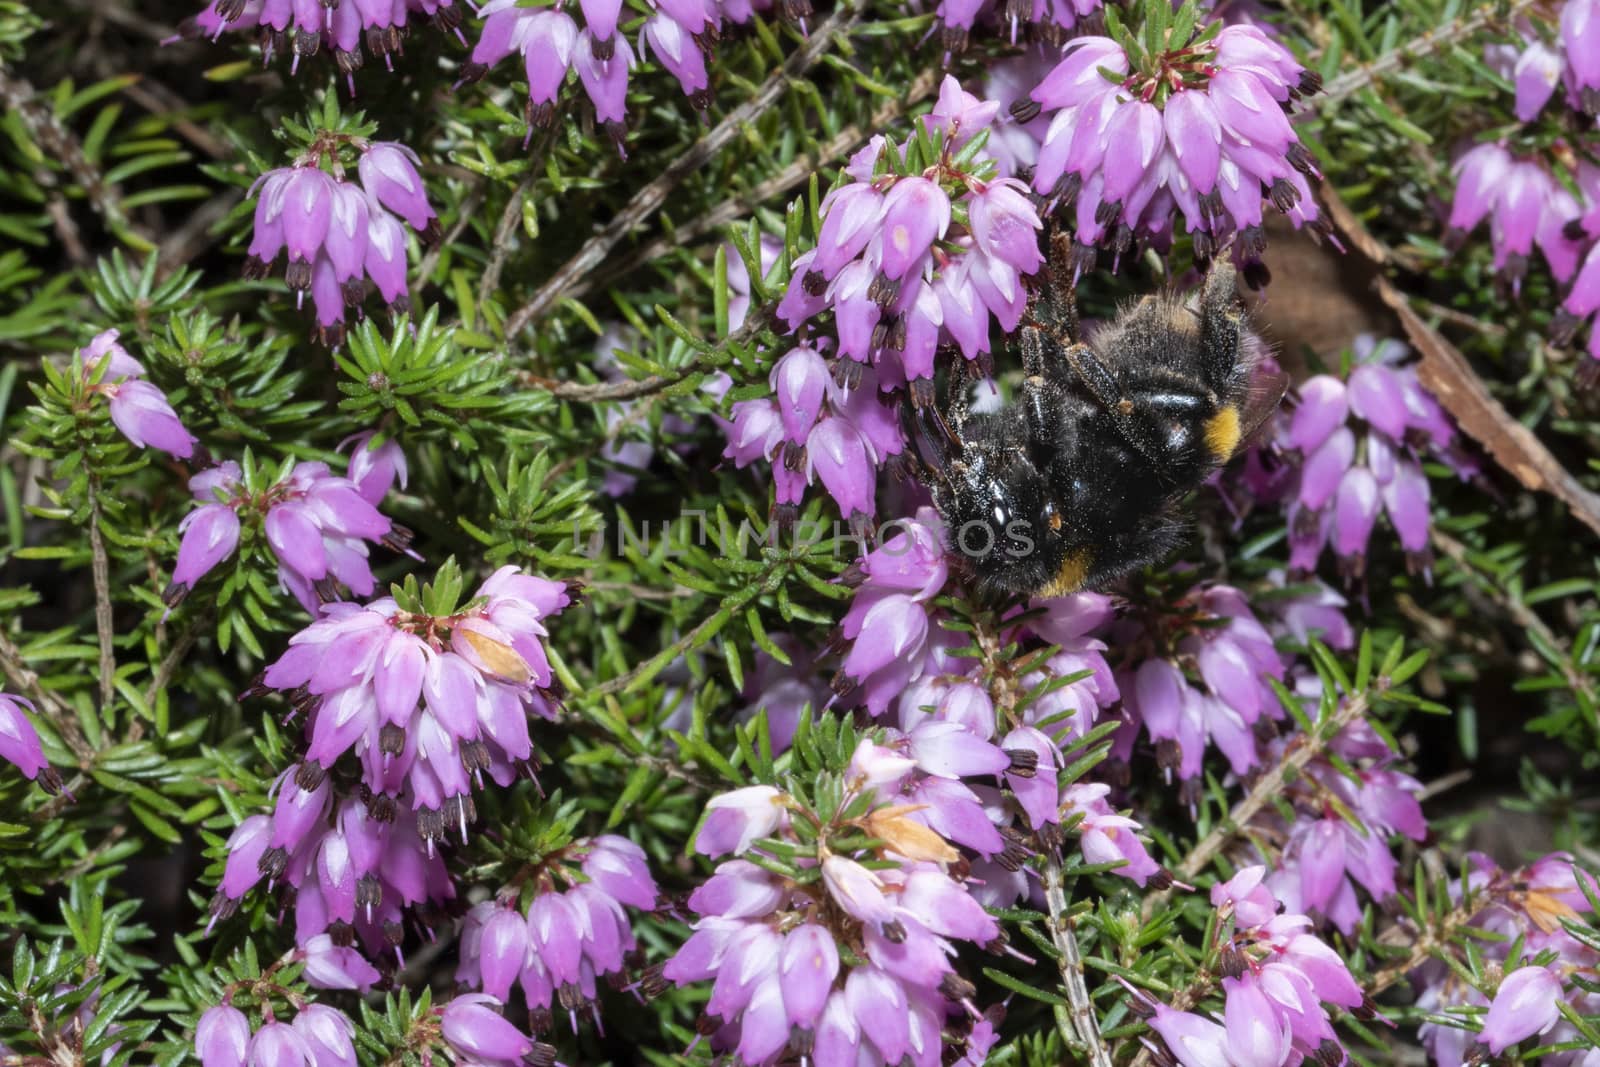 Closeup view of a bumblebee surfing on violet calluna vulgaris flowers